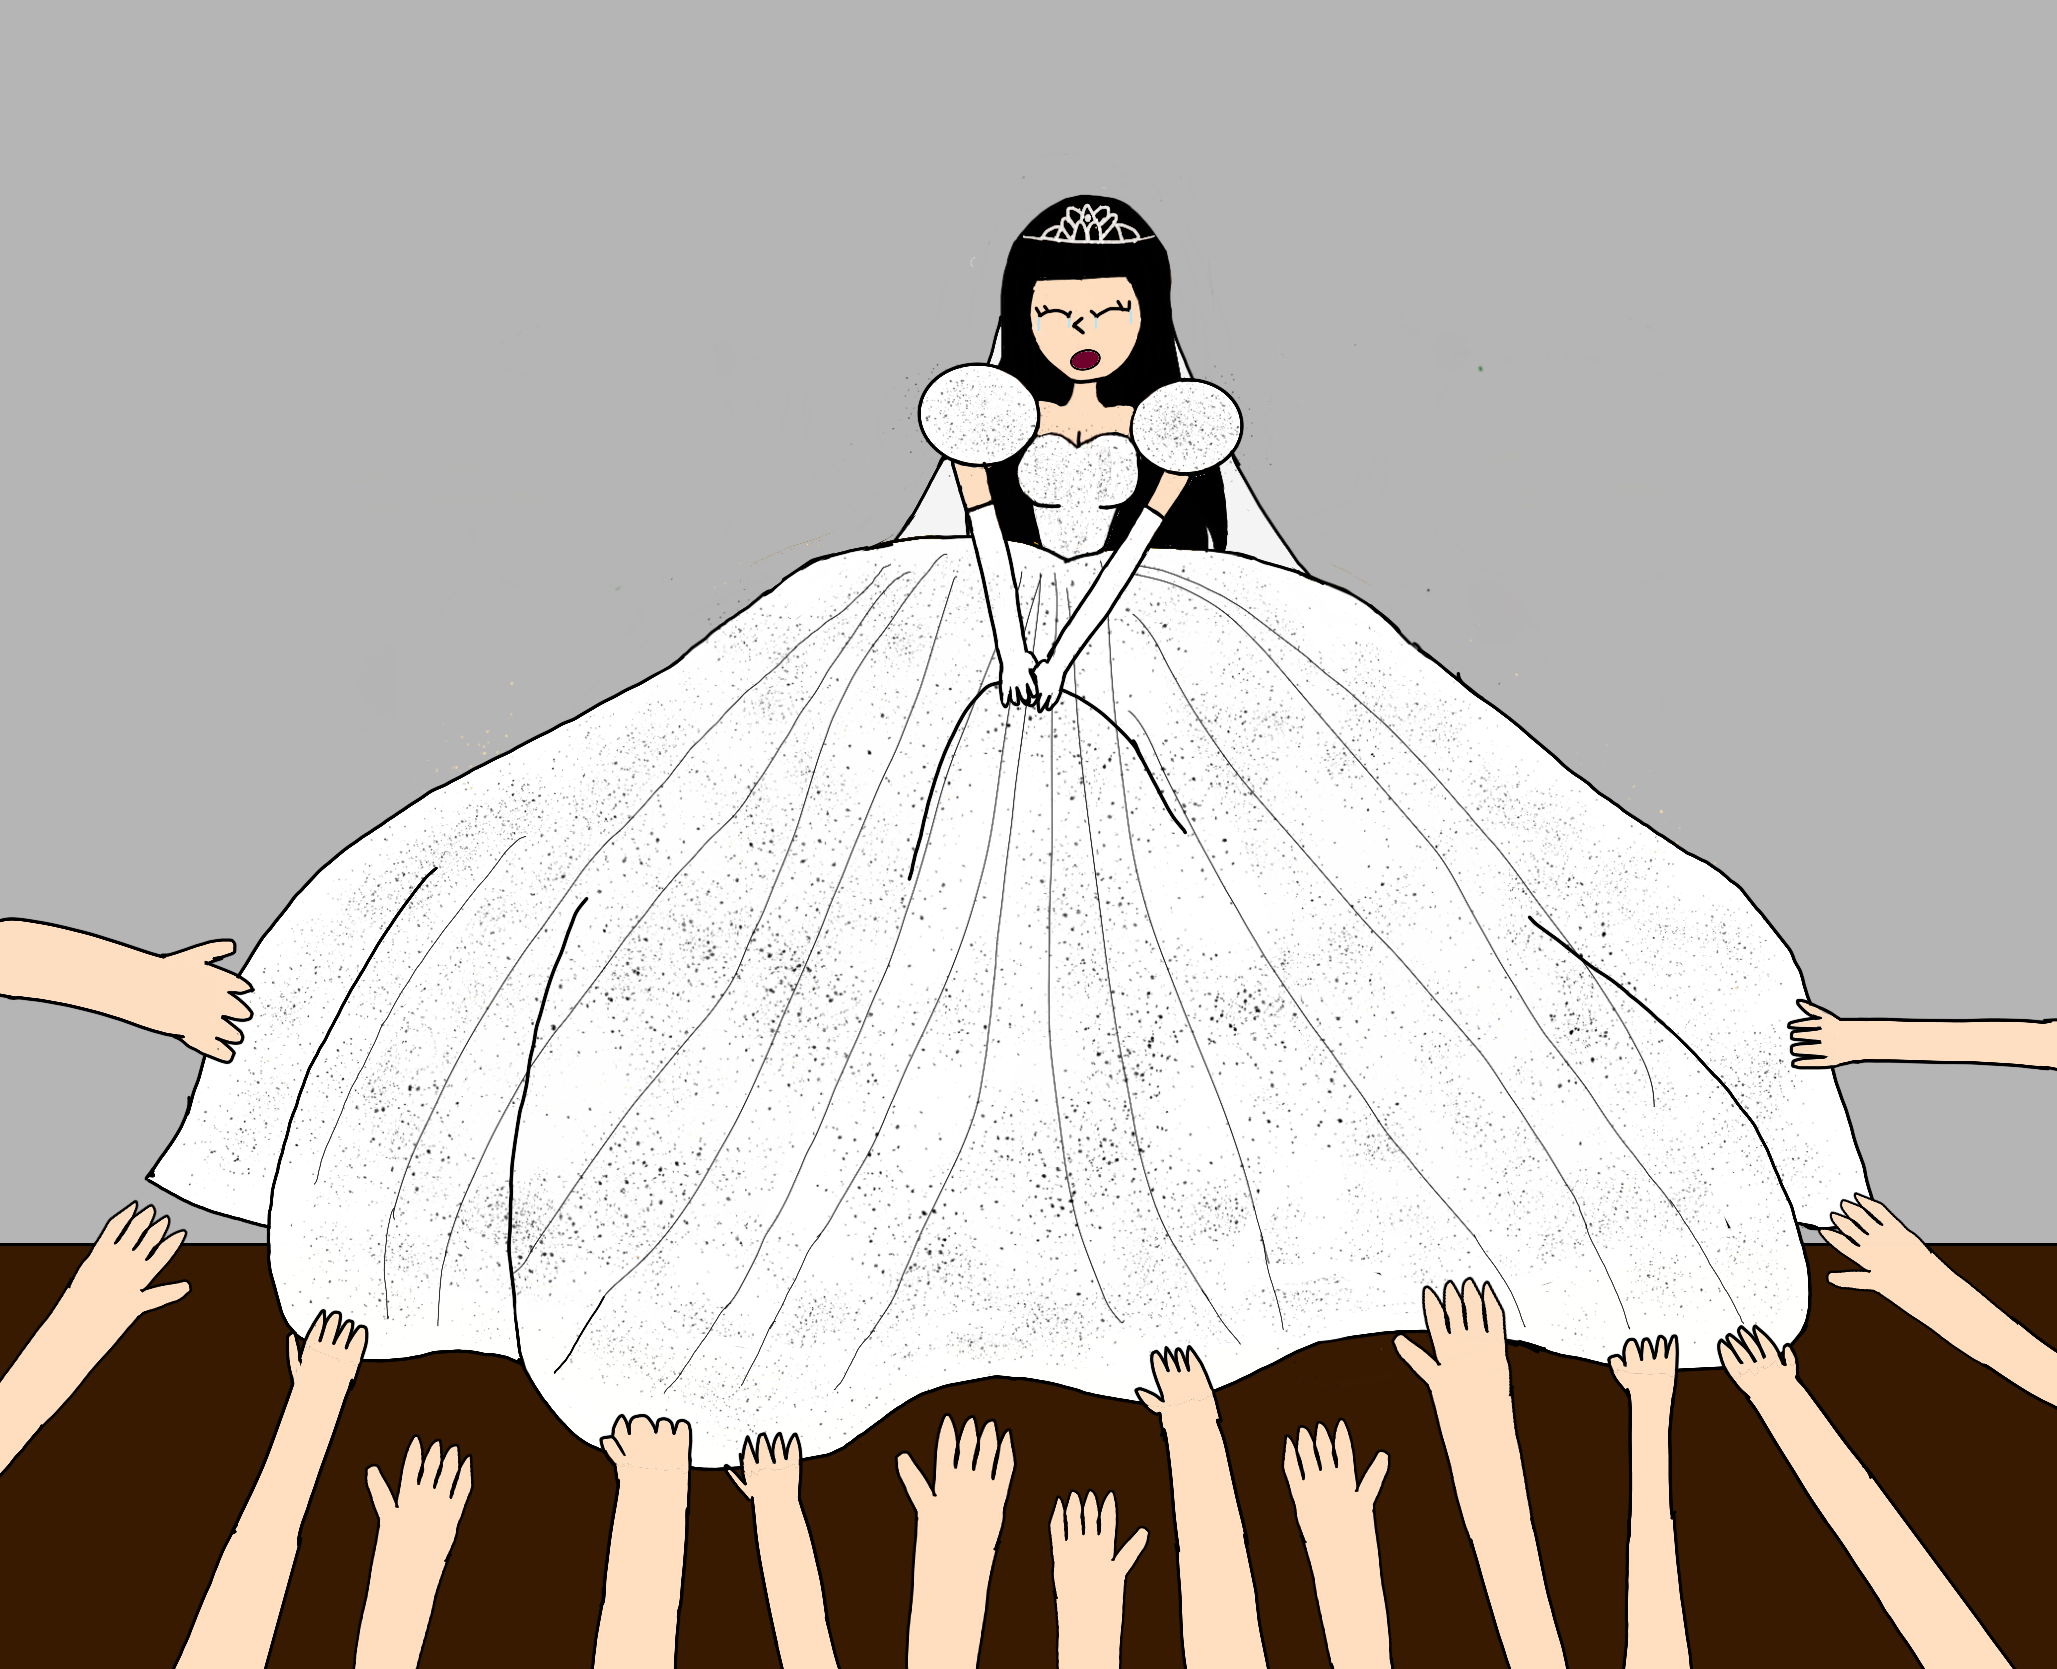 Wedding Bride Doll by PrincessEdith568 on DeviantArt